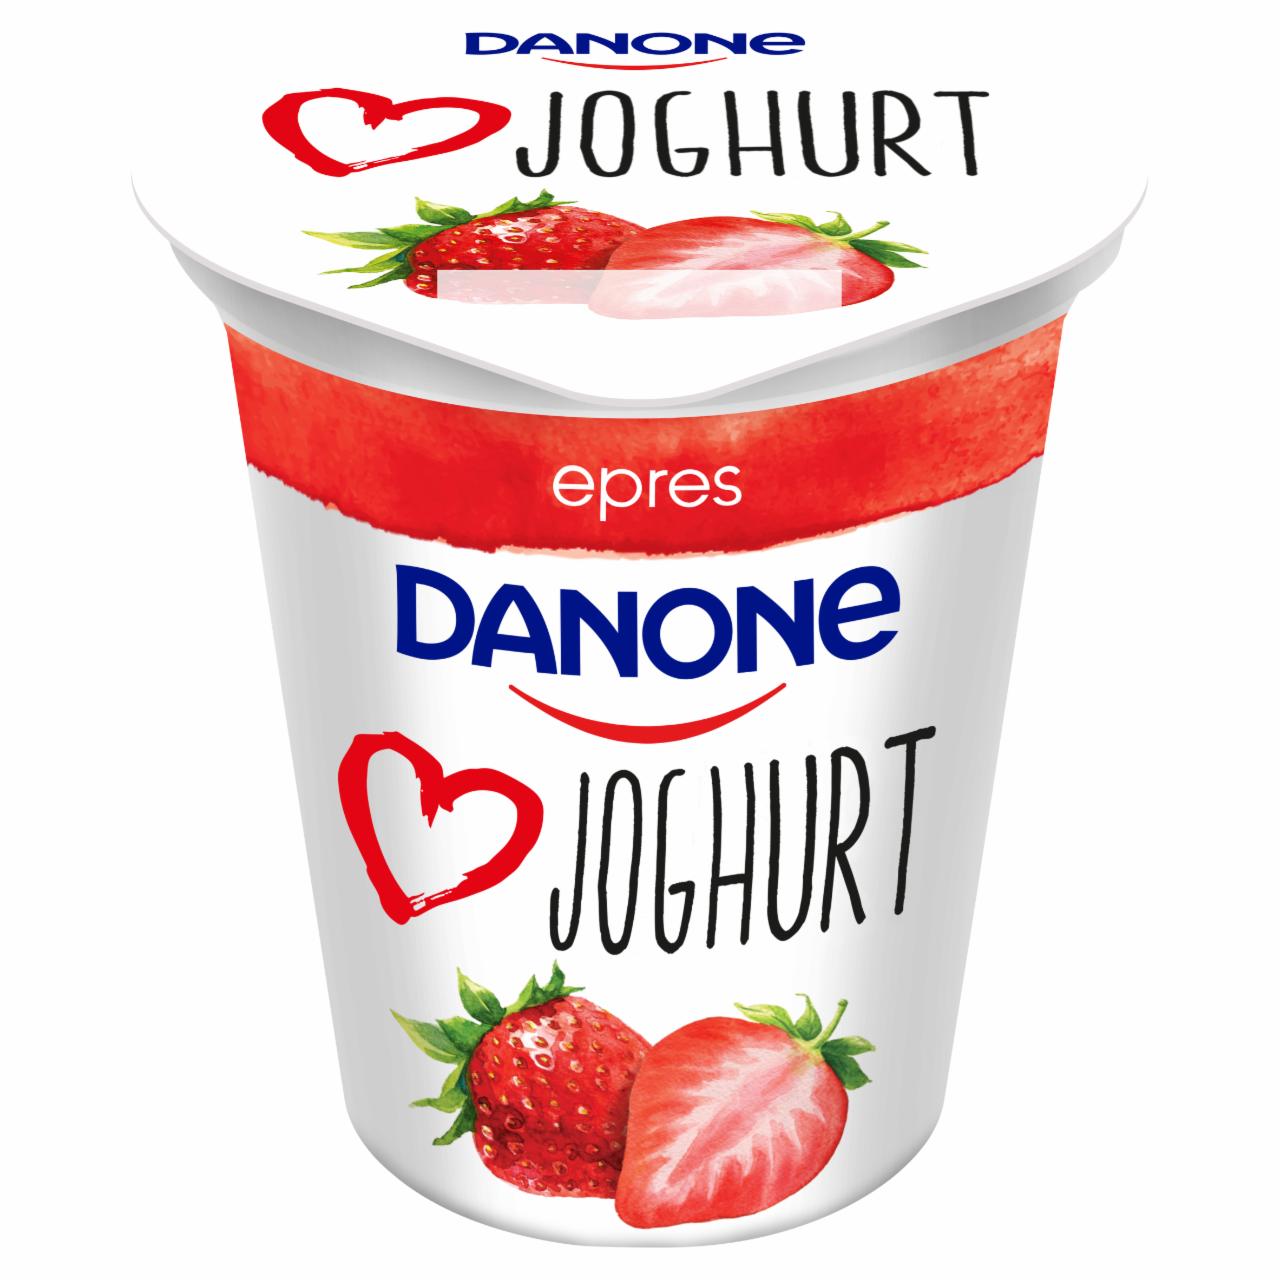 Képek - Danone epres joghurt 140 g